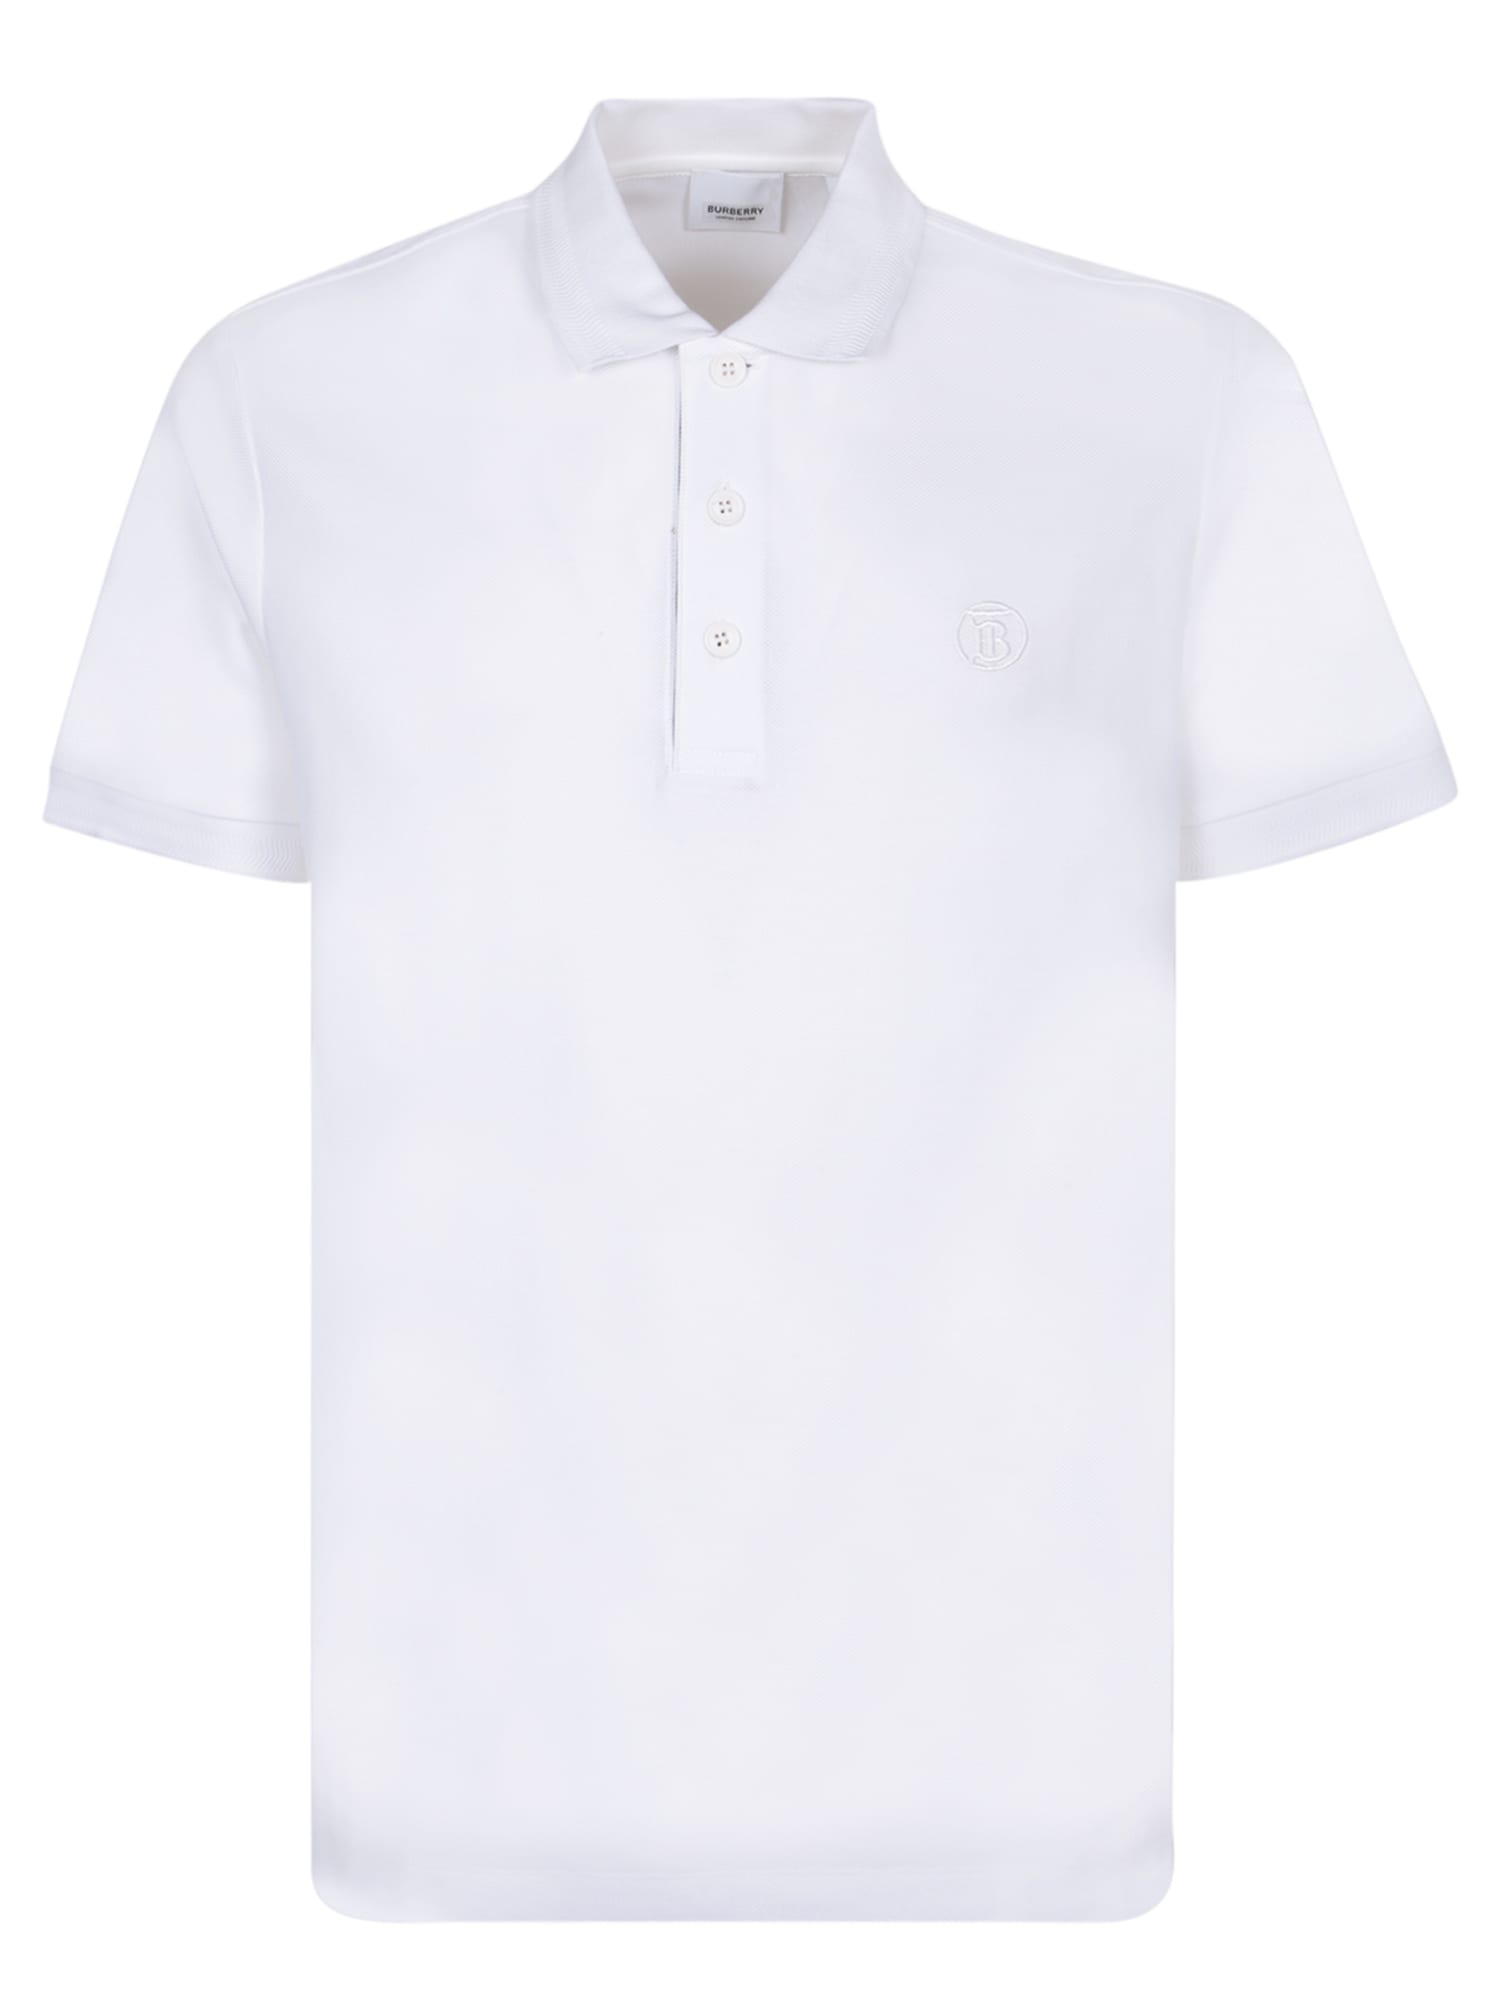 Eddie Tb White Polo Shirt